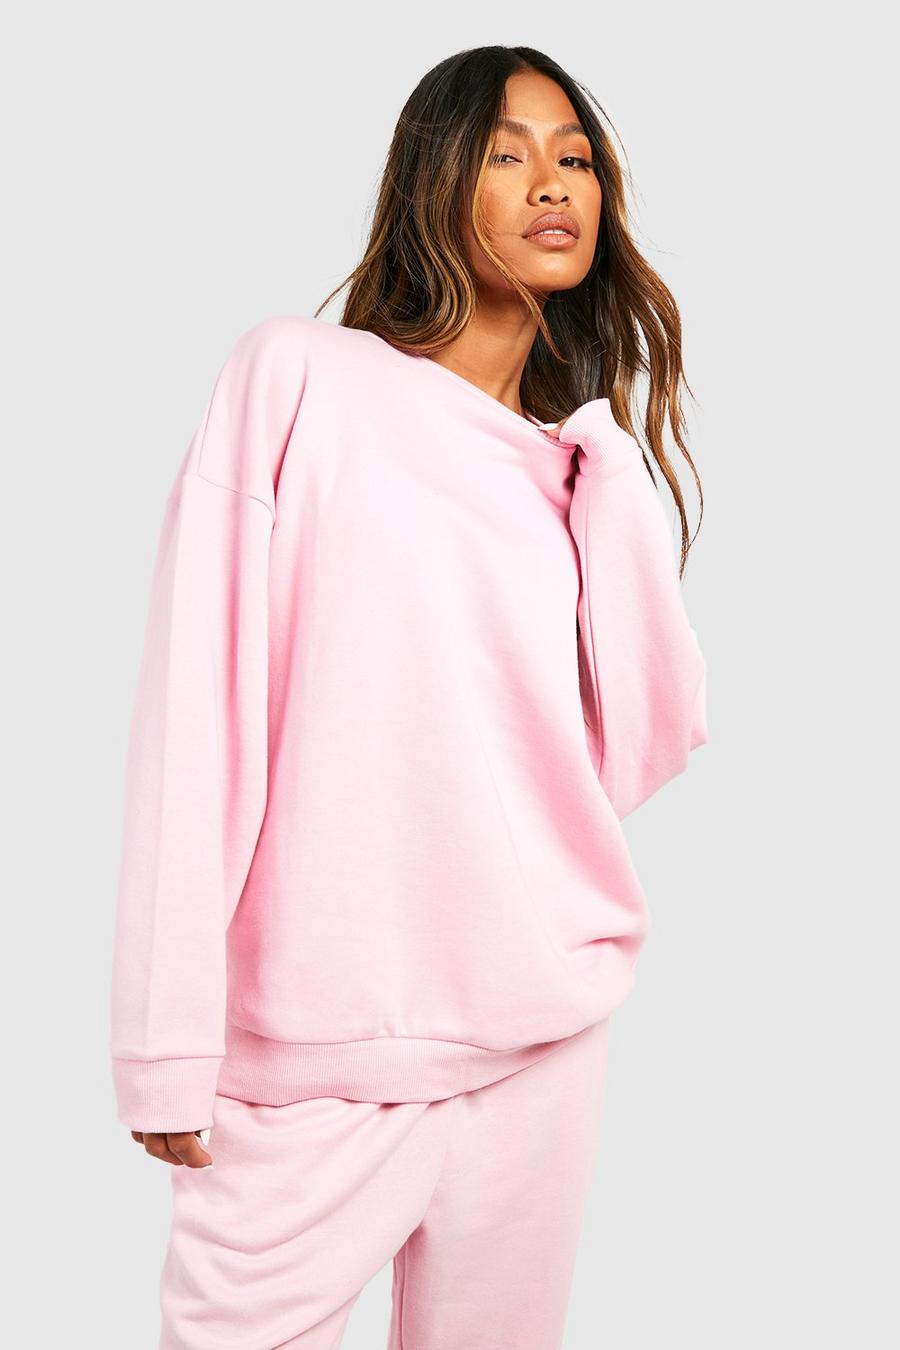 Women's Pink Sweatshirts, Hot Pink & Baby Pink Sweatshirts